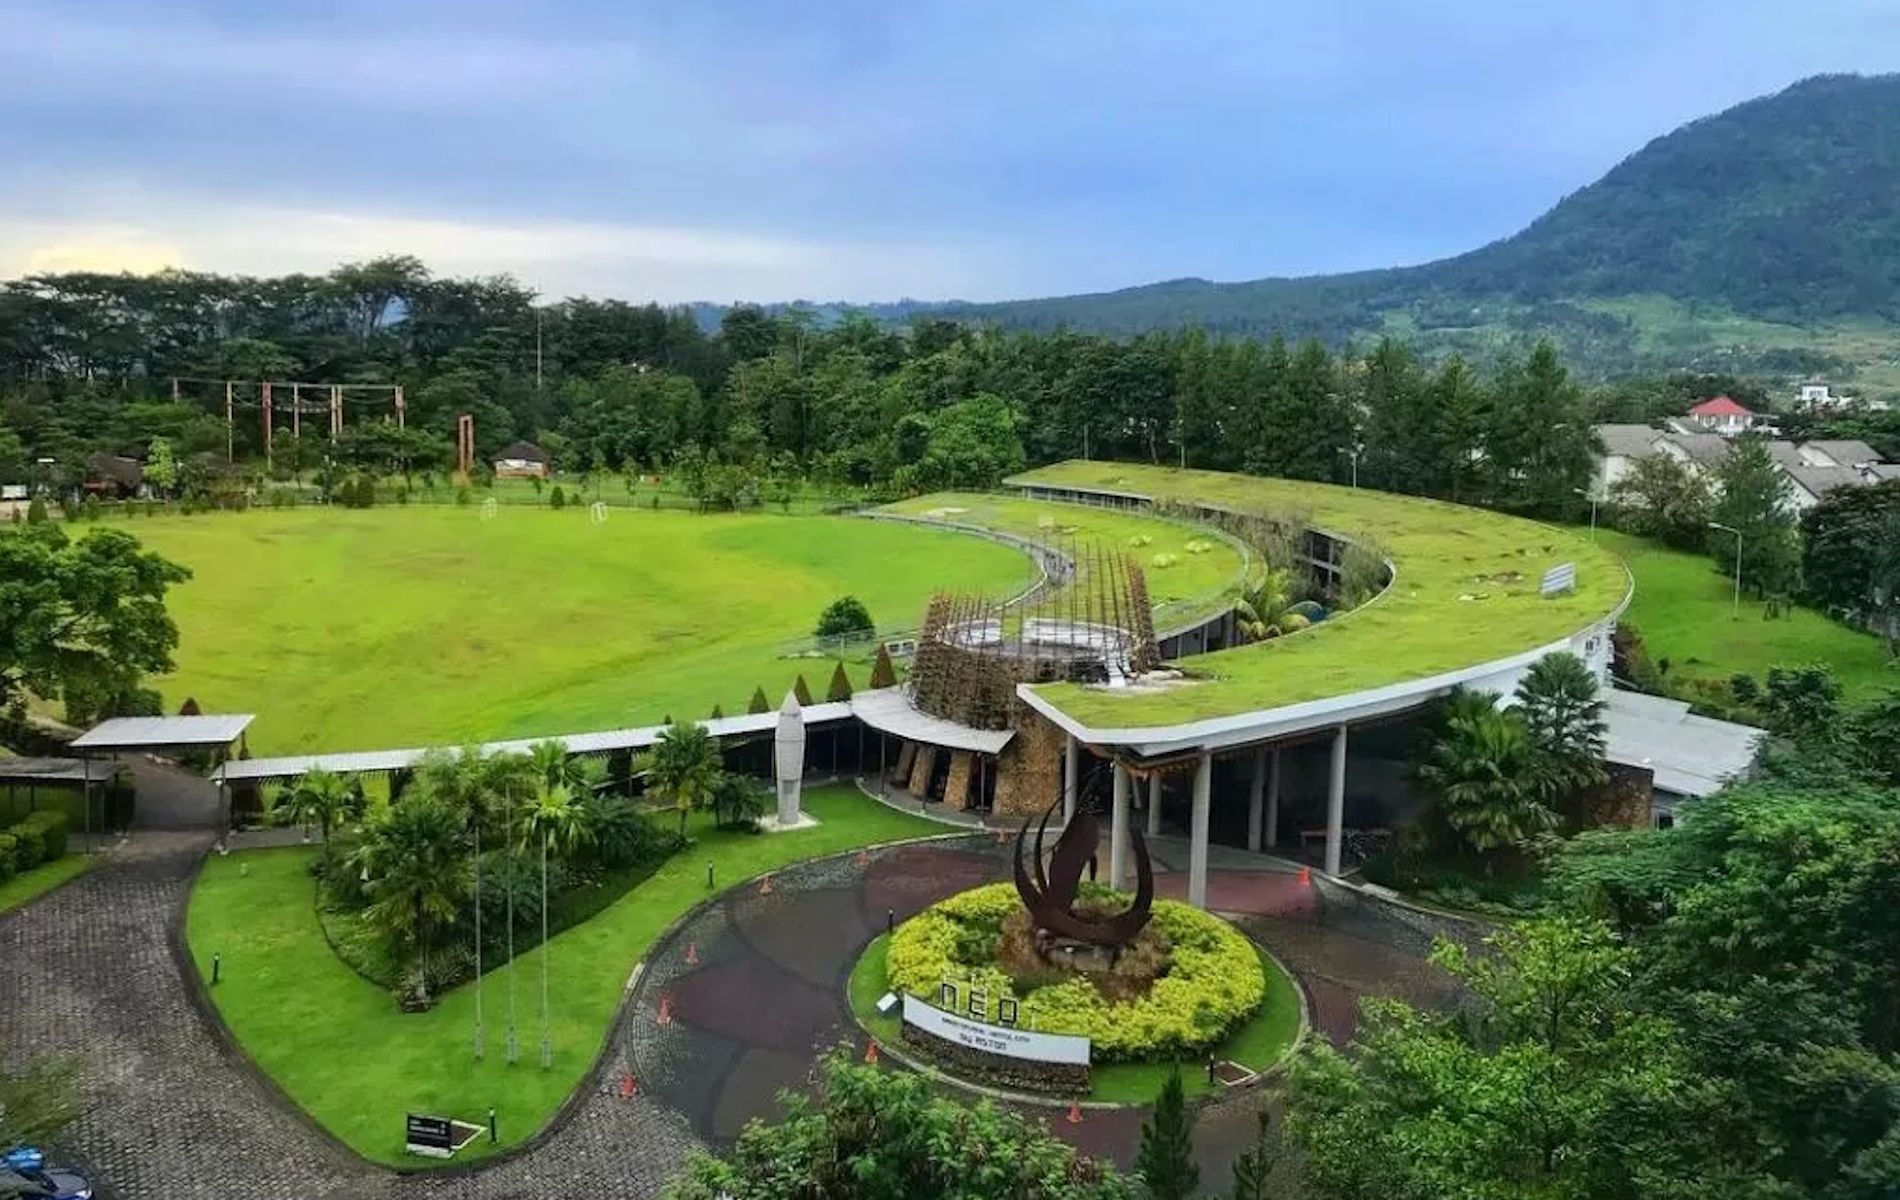 Taman Budaya Sentul adalah tempat rekreasi outdoor dengan beragam aktivitas di kawasan Sentul, Bogor, Jawa Barat.